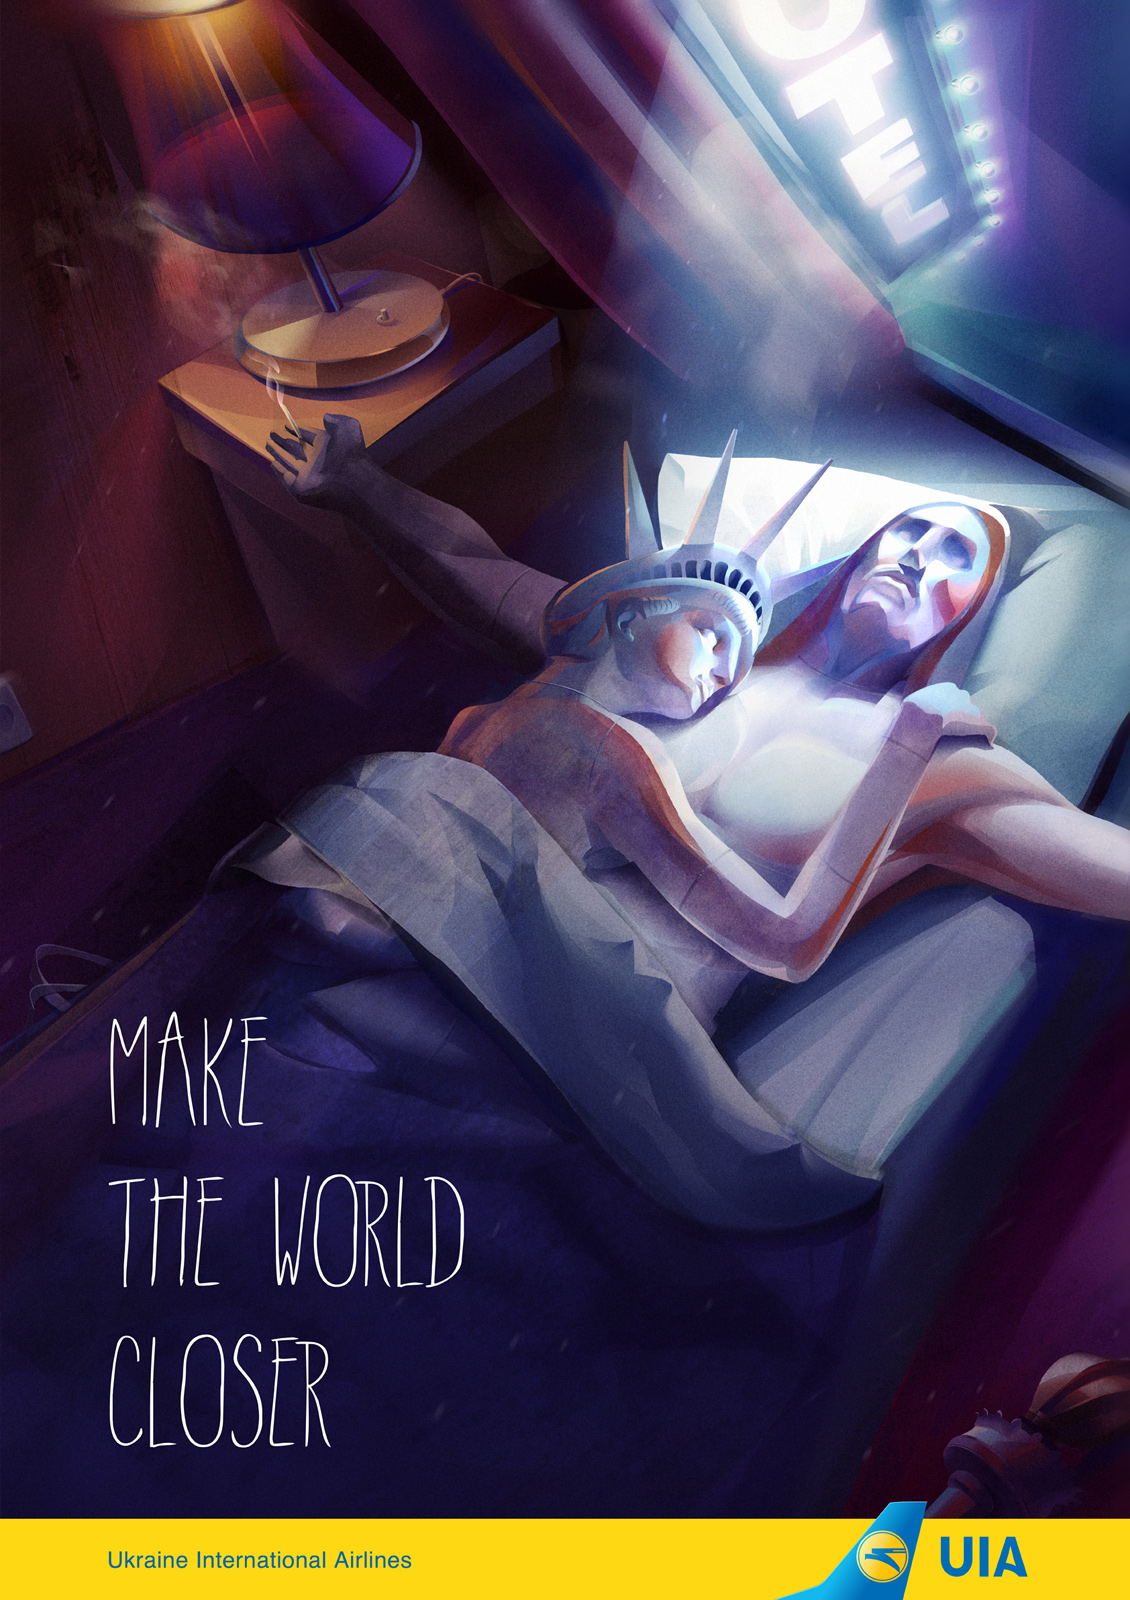 Ukraine Airlines Ad: Make The World Closer